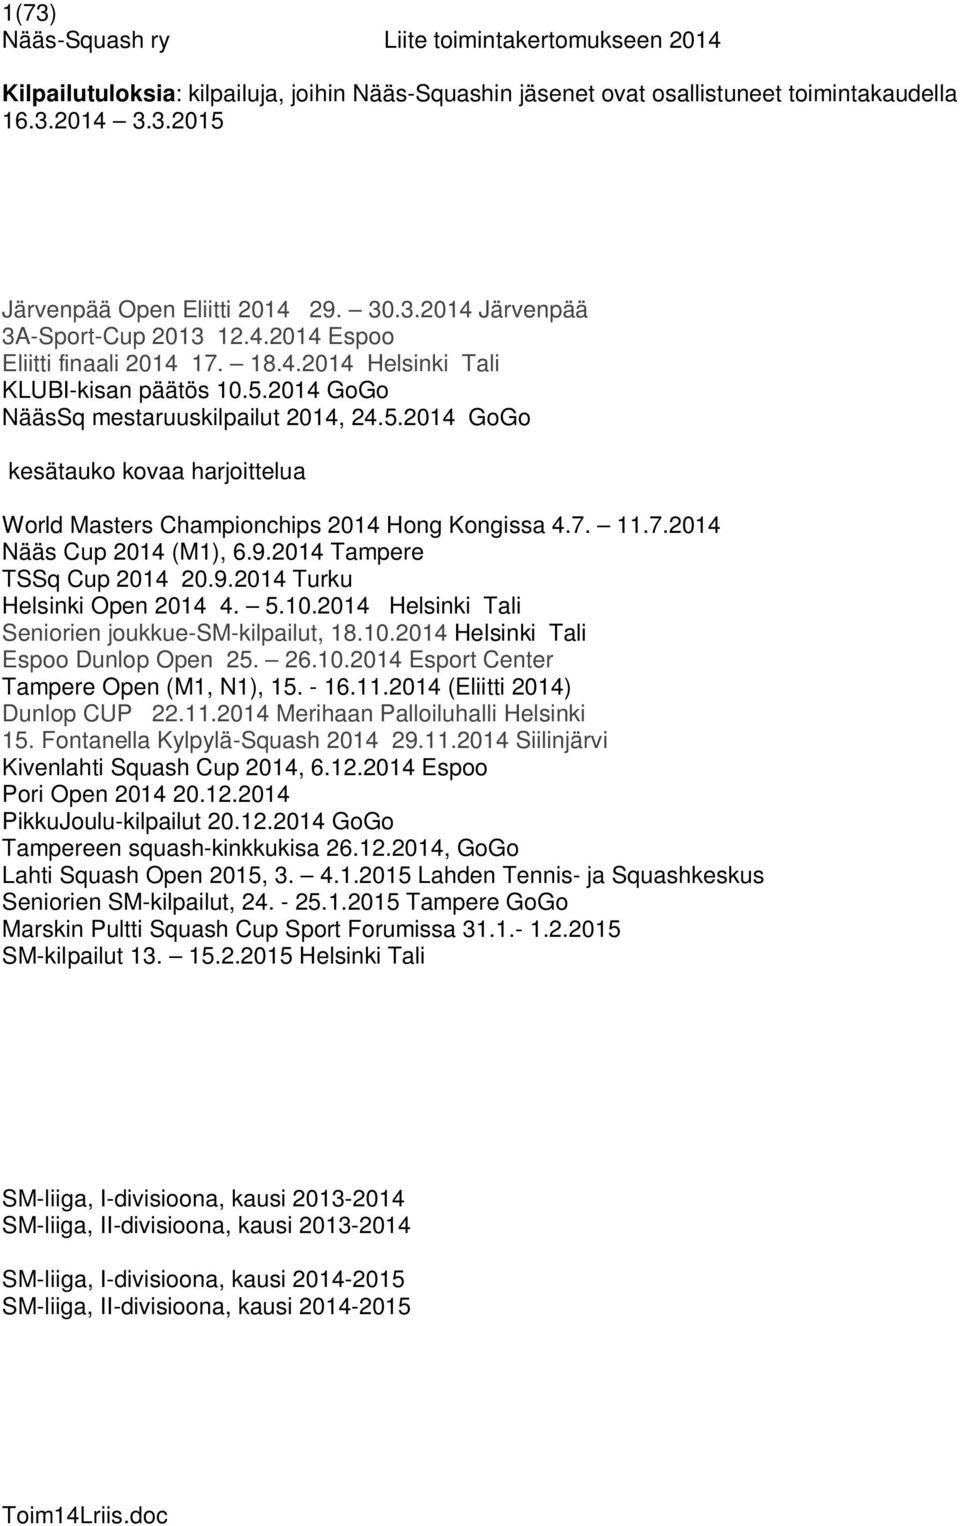 014 Helsinki Tali Seniorien joukkue-sm-kilpailut, 18.10.014 Helsinki Tali Espoo Dunlop Open 5. 6.10.014 Esport Center Tampere Open (M1, N1), 15. - 16.11.014 (Eliitti 014) Dunlop CUP.11.014 Merihaan Palloiluhalli Helsinki 15.